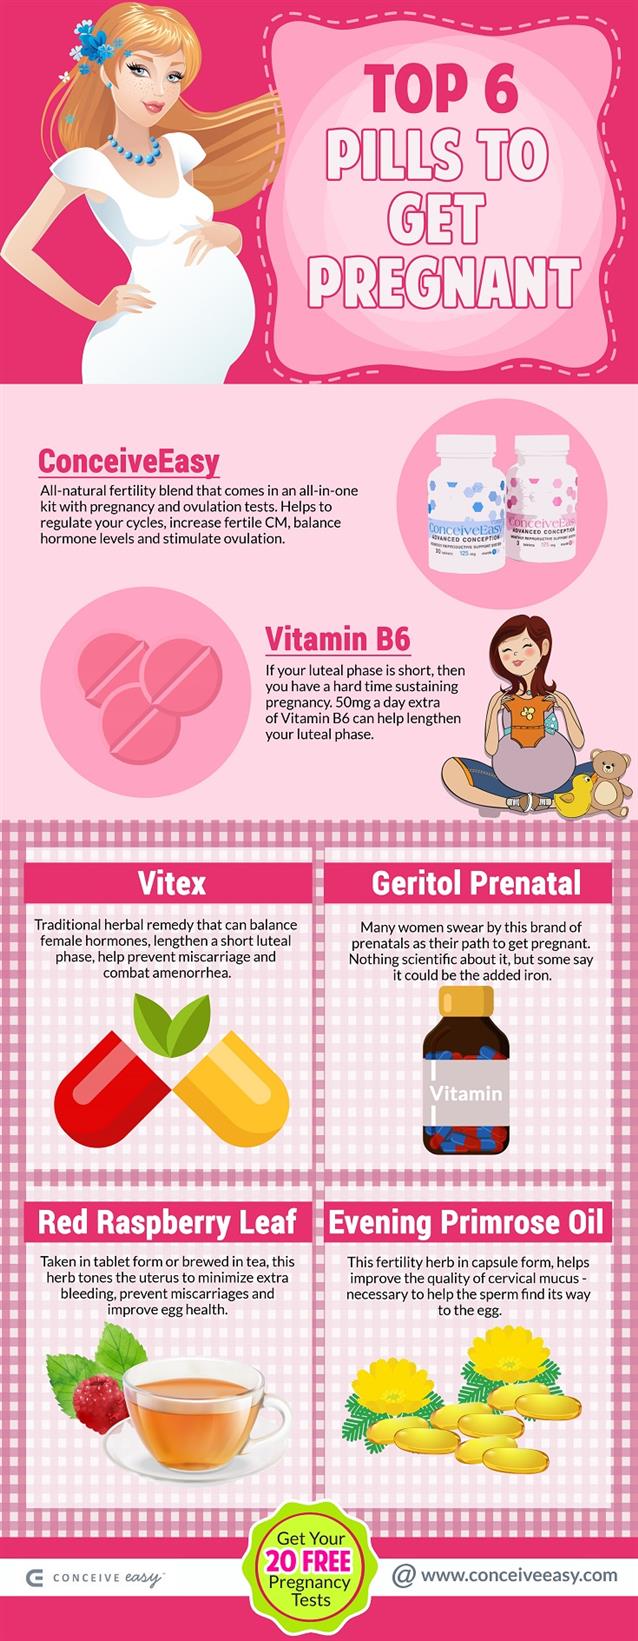 pills to get pregnant: 6 fertility pills that work | conceiveeasy